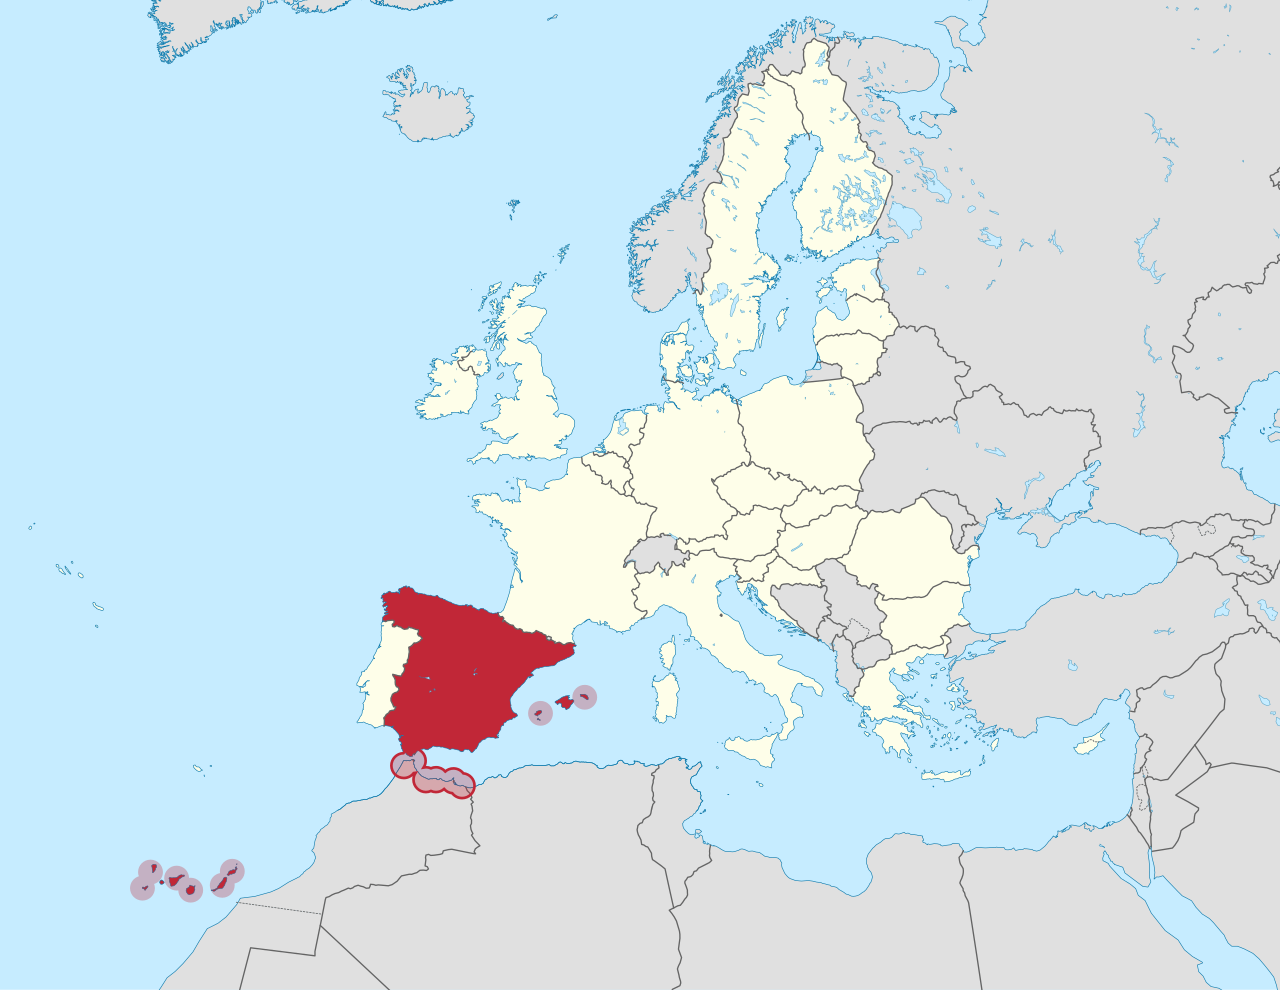 Spain in European Union